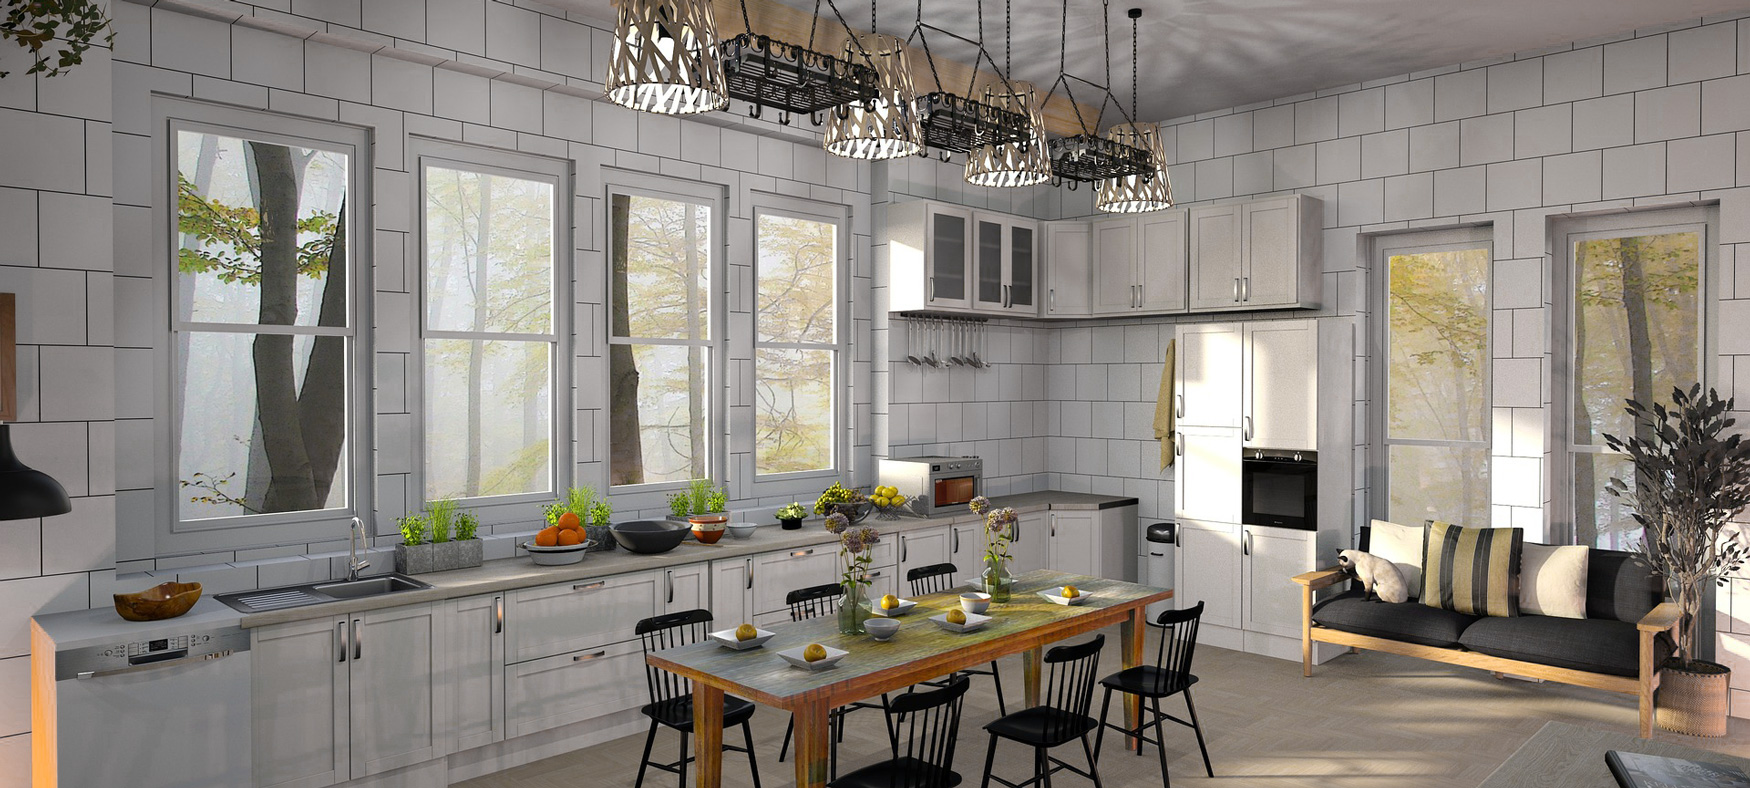 Modern kitchen with New York style backsplash.